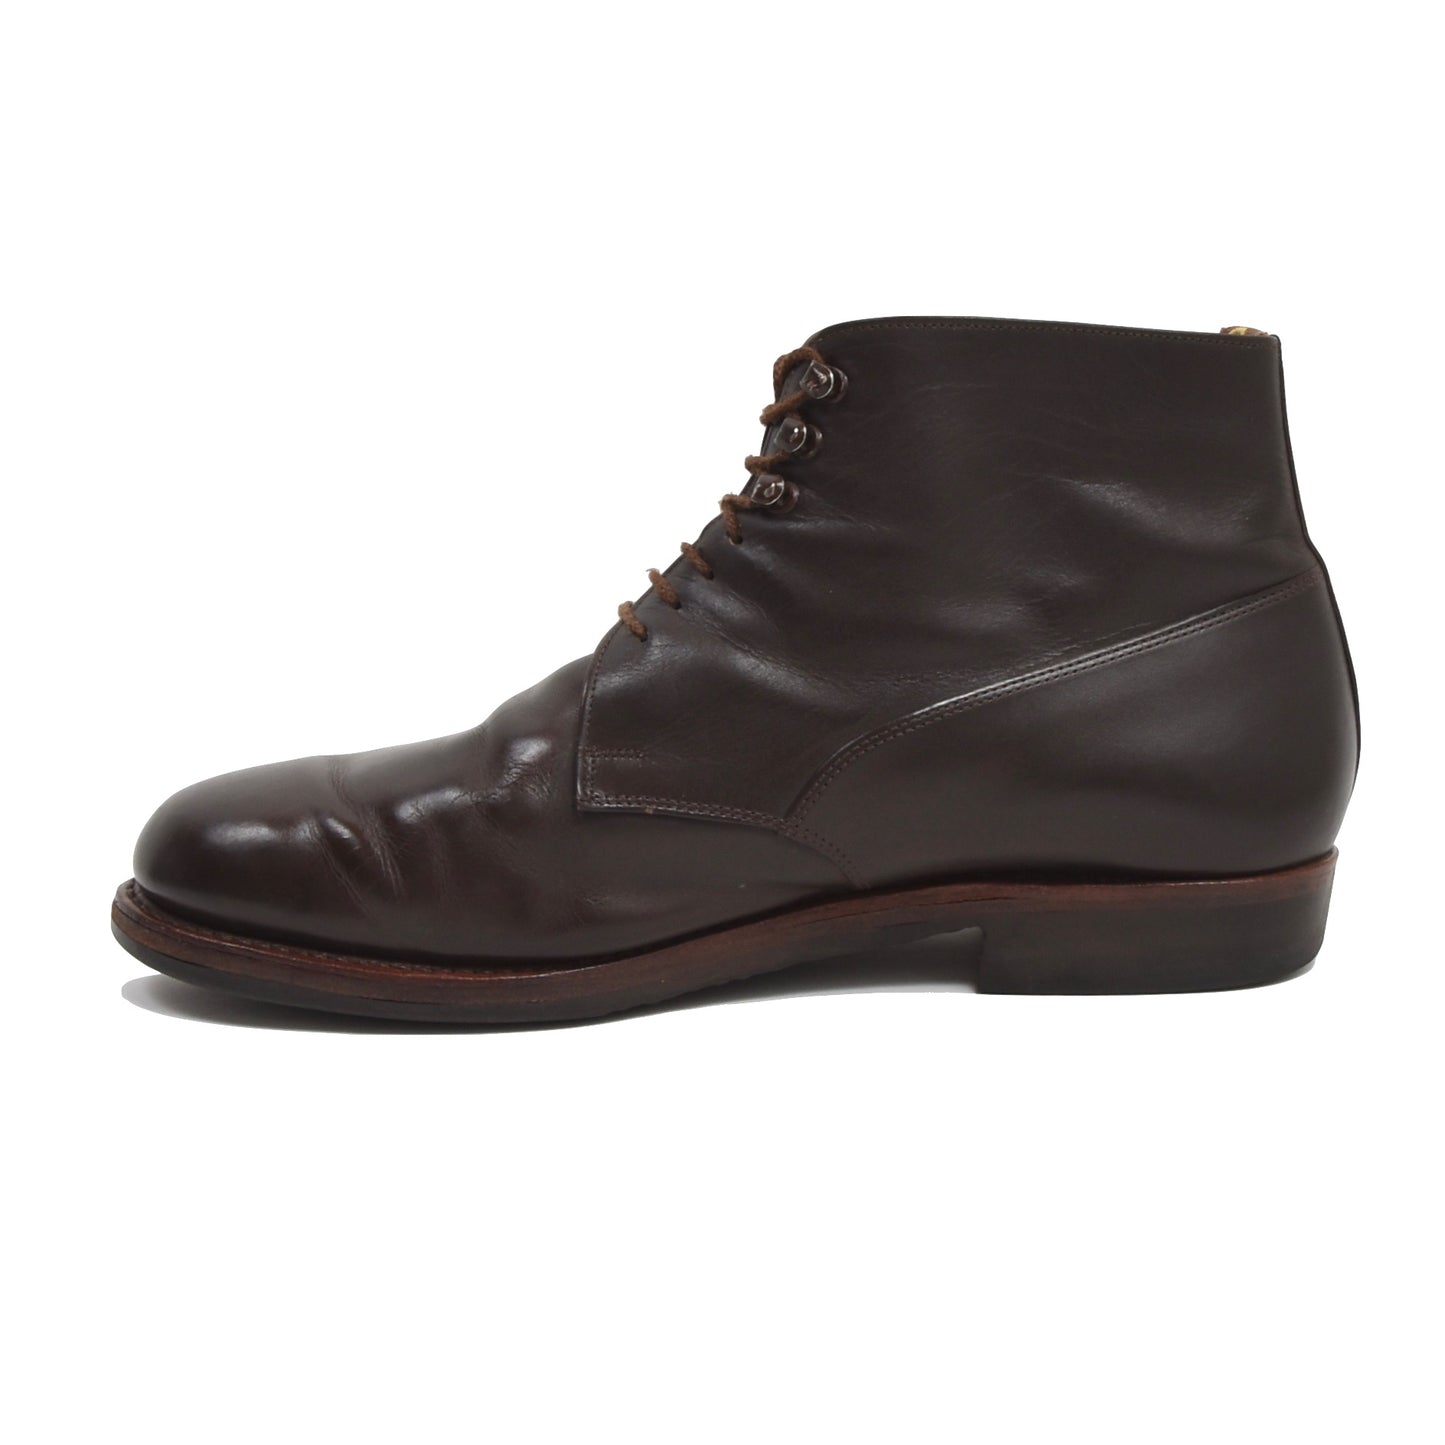 Vintage Fox Medana x Ludwig Reiter Boots Size 8.5 - Brown